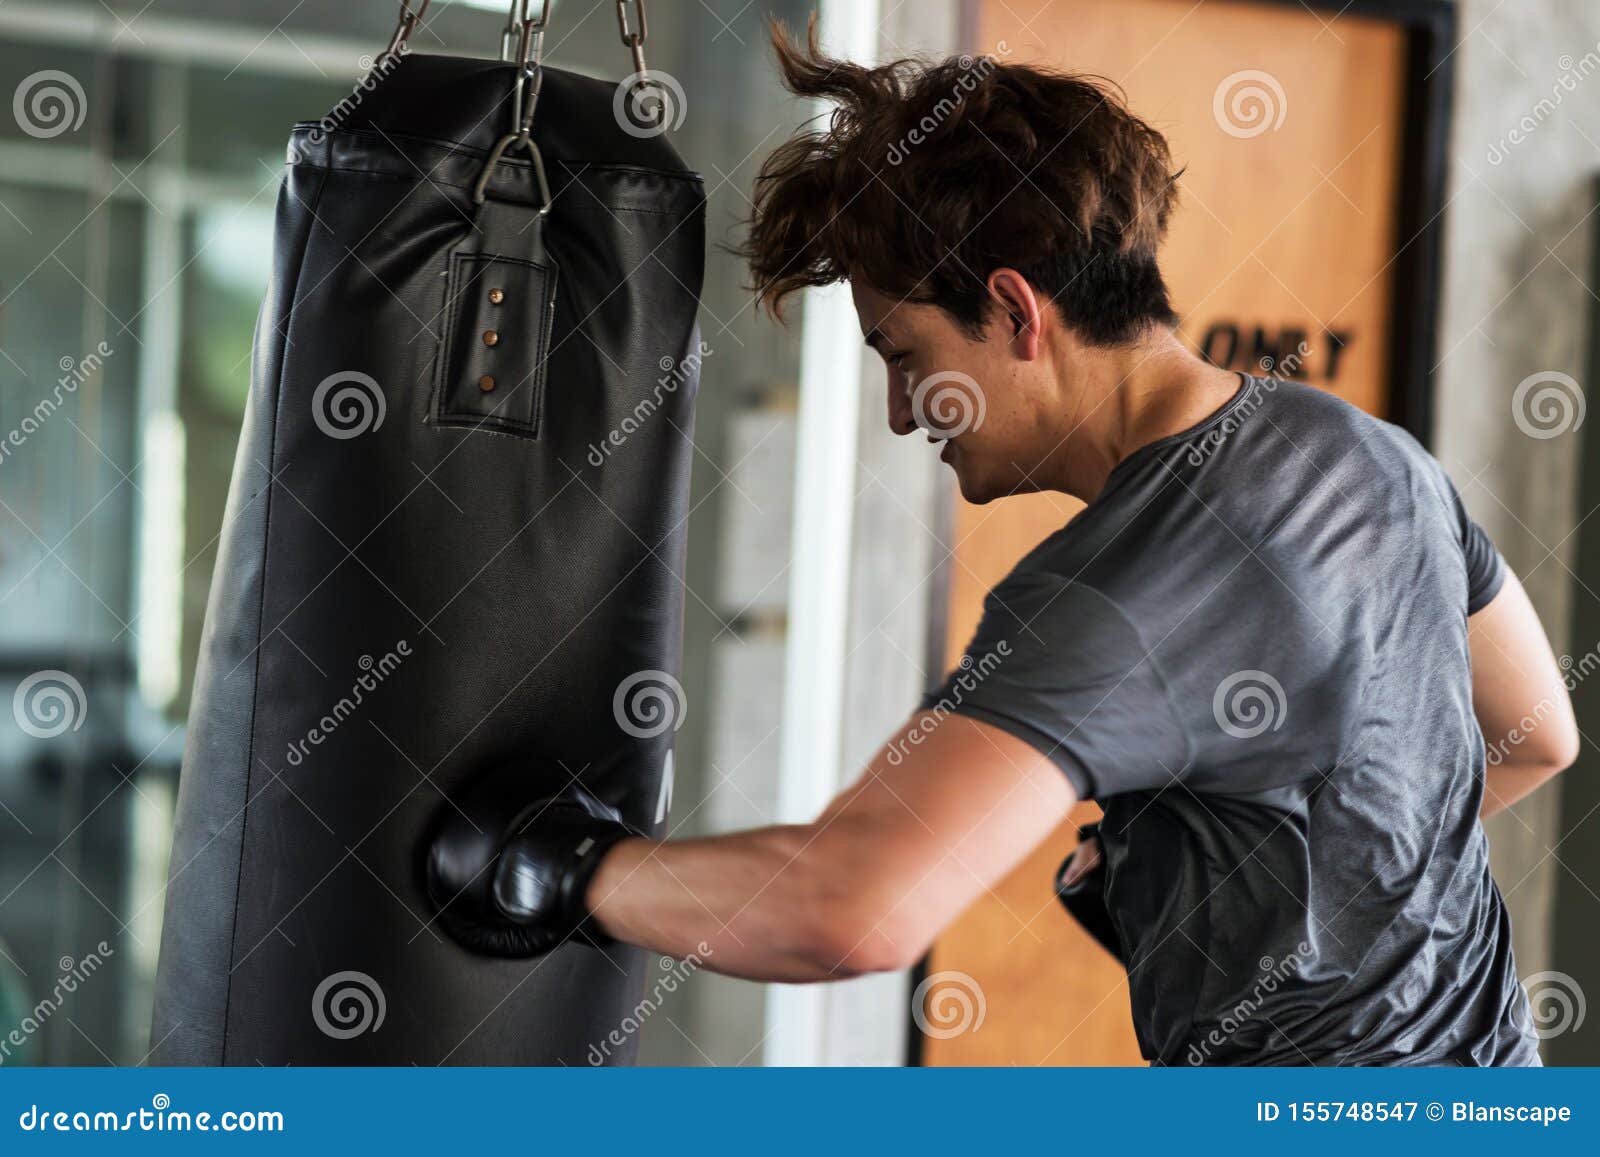 Man Punch Big Bag At Fitness Gym Stock Image Image of